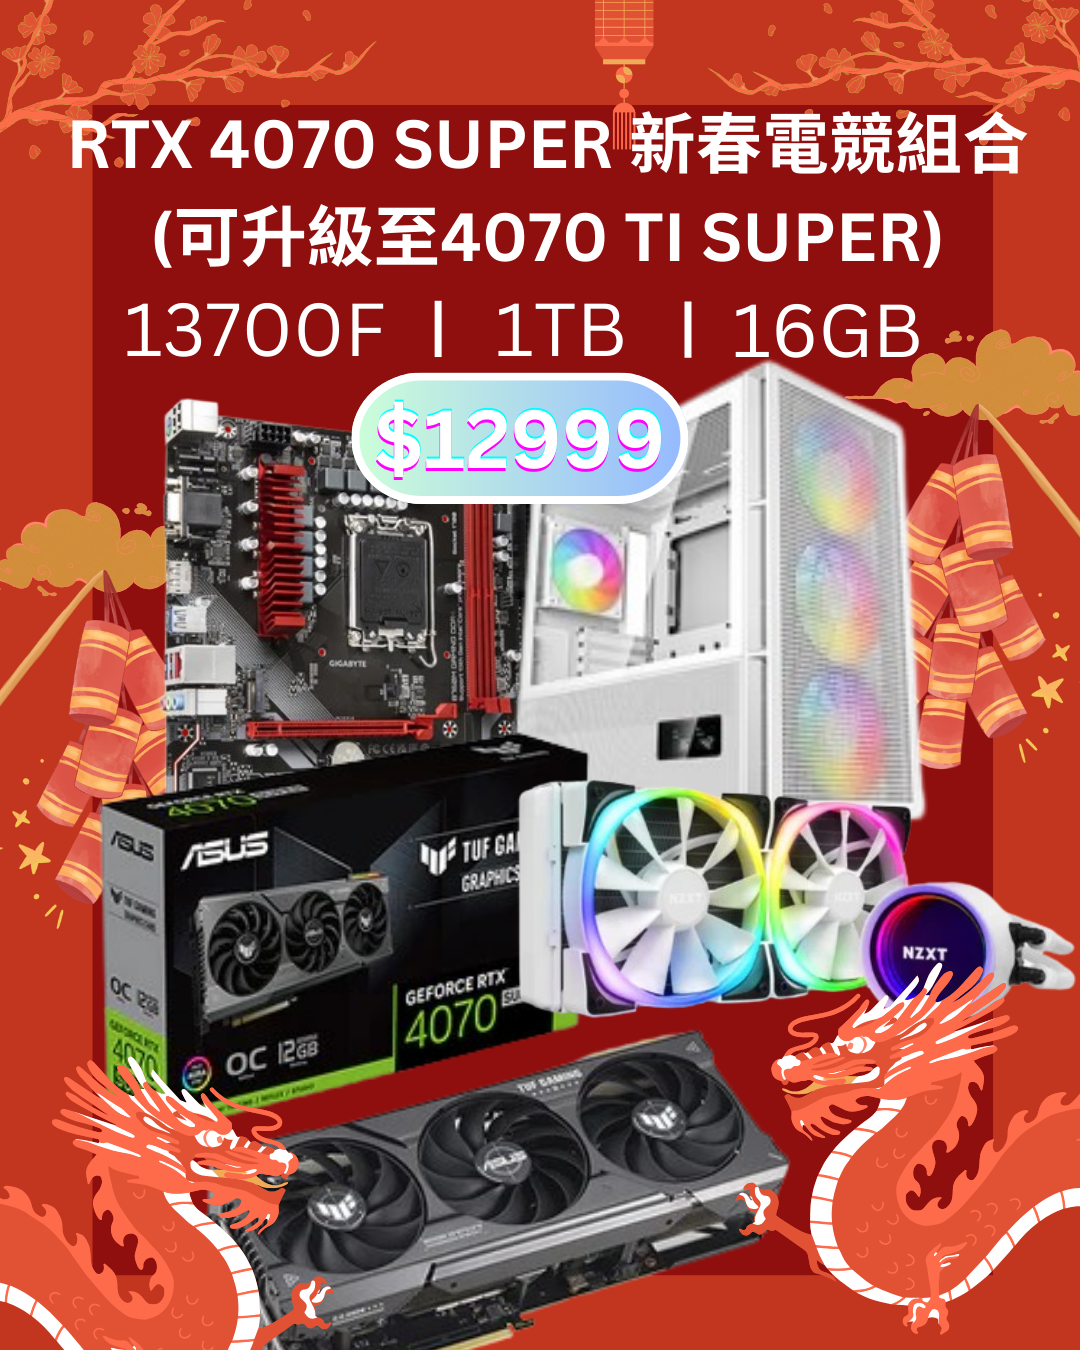 「RTX40系列SUPER」$12999 RTX 4070 SUPER 3A大作電競組合 (可升級至4070 TI SUPER)